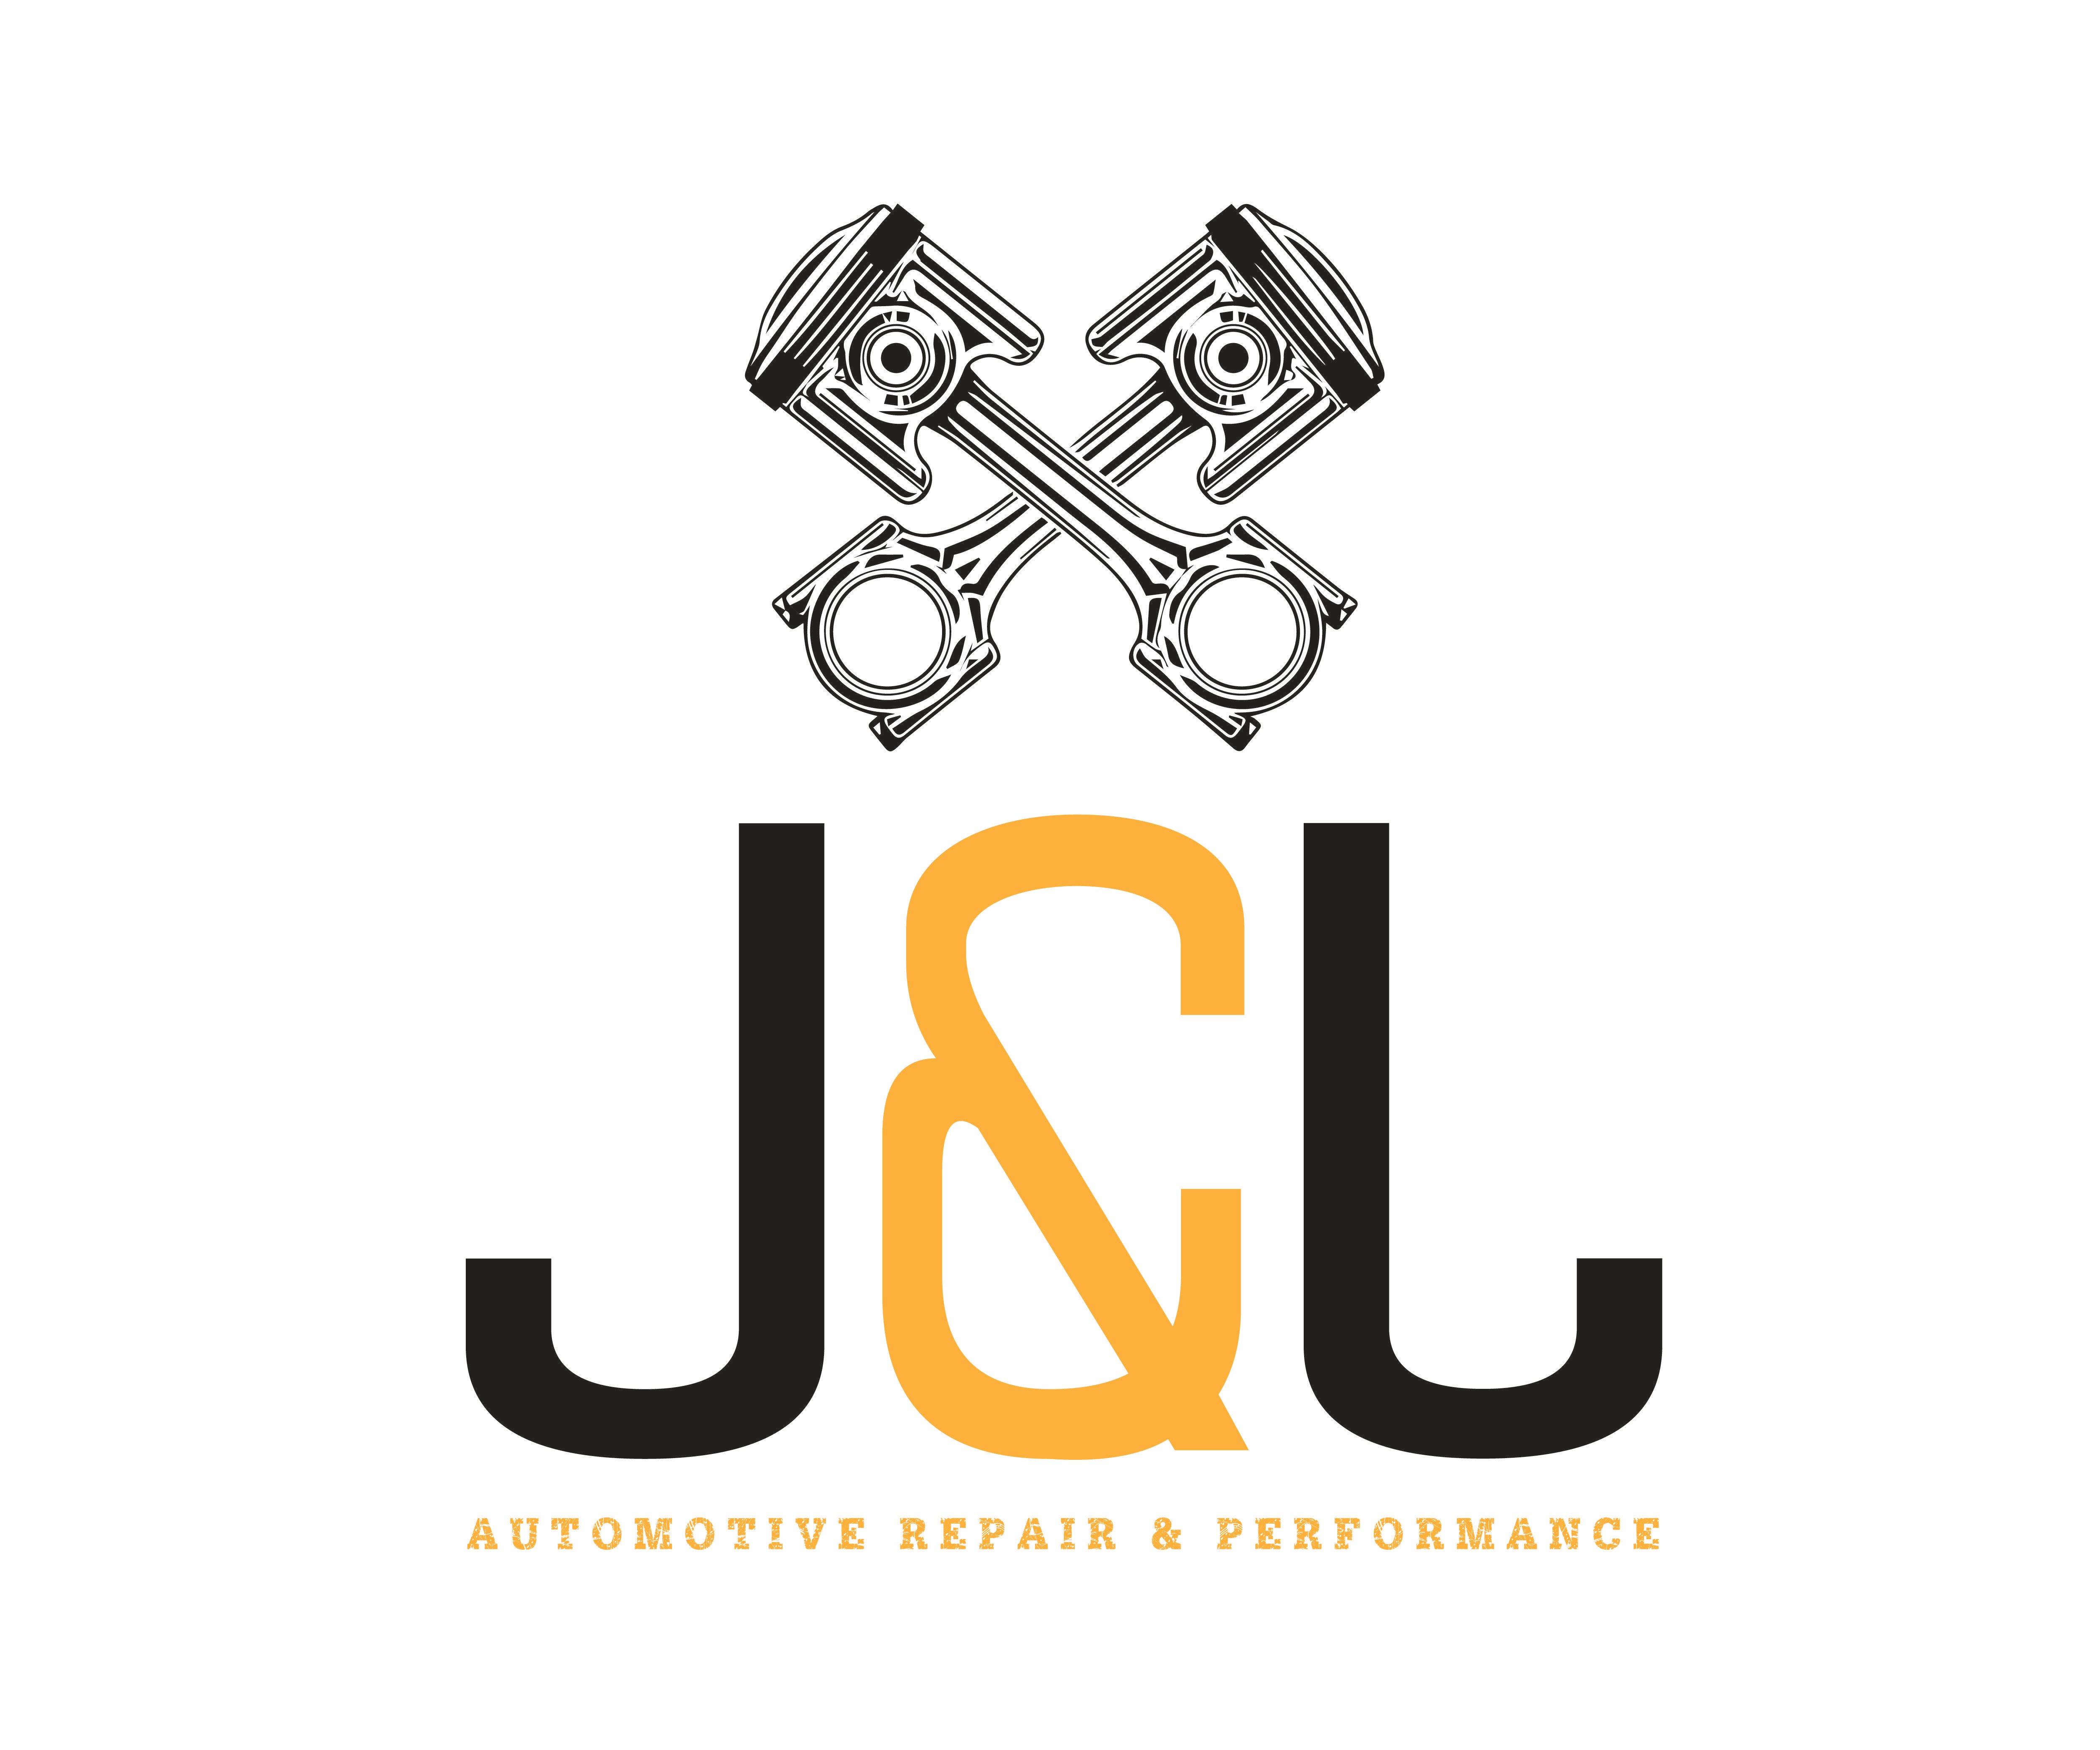 J&J Logo - Bold, Serious, Automotive Logo Design for J&J Automotive Repair ...